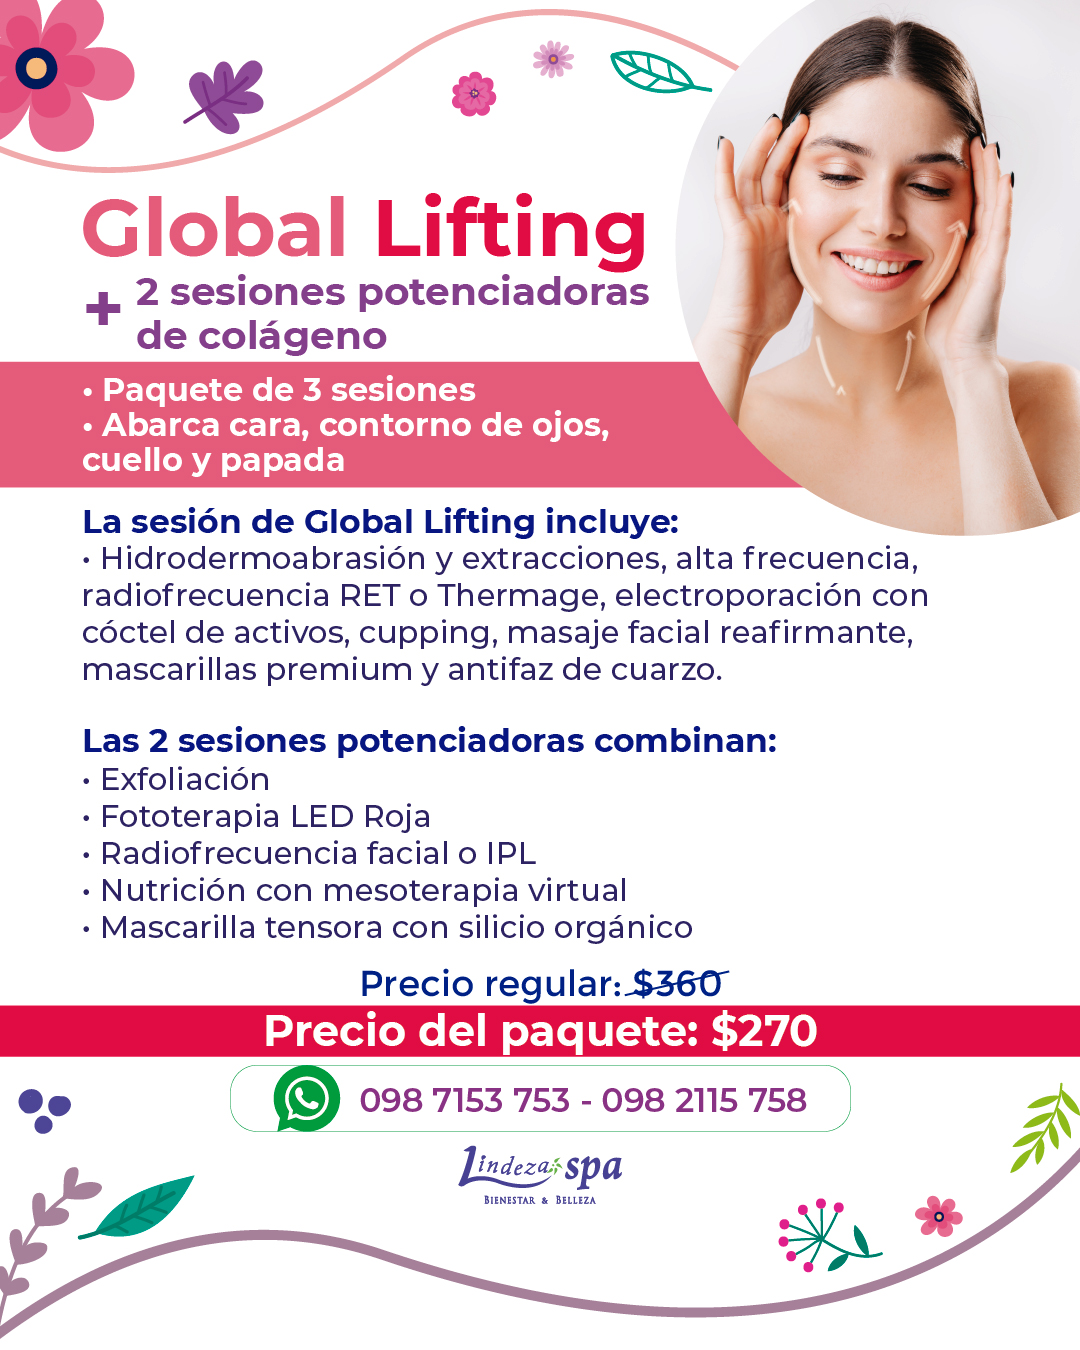 Global Lifting, colageno, spa en Guayaquil, cara caida, lifting facial, rejuvenecimiento facial, sin cirugía, radiofrecuencia facial, thermage lifting, papada